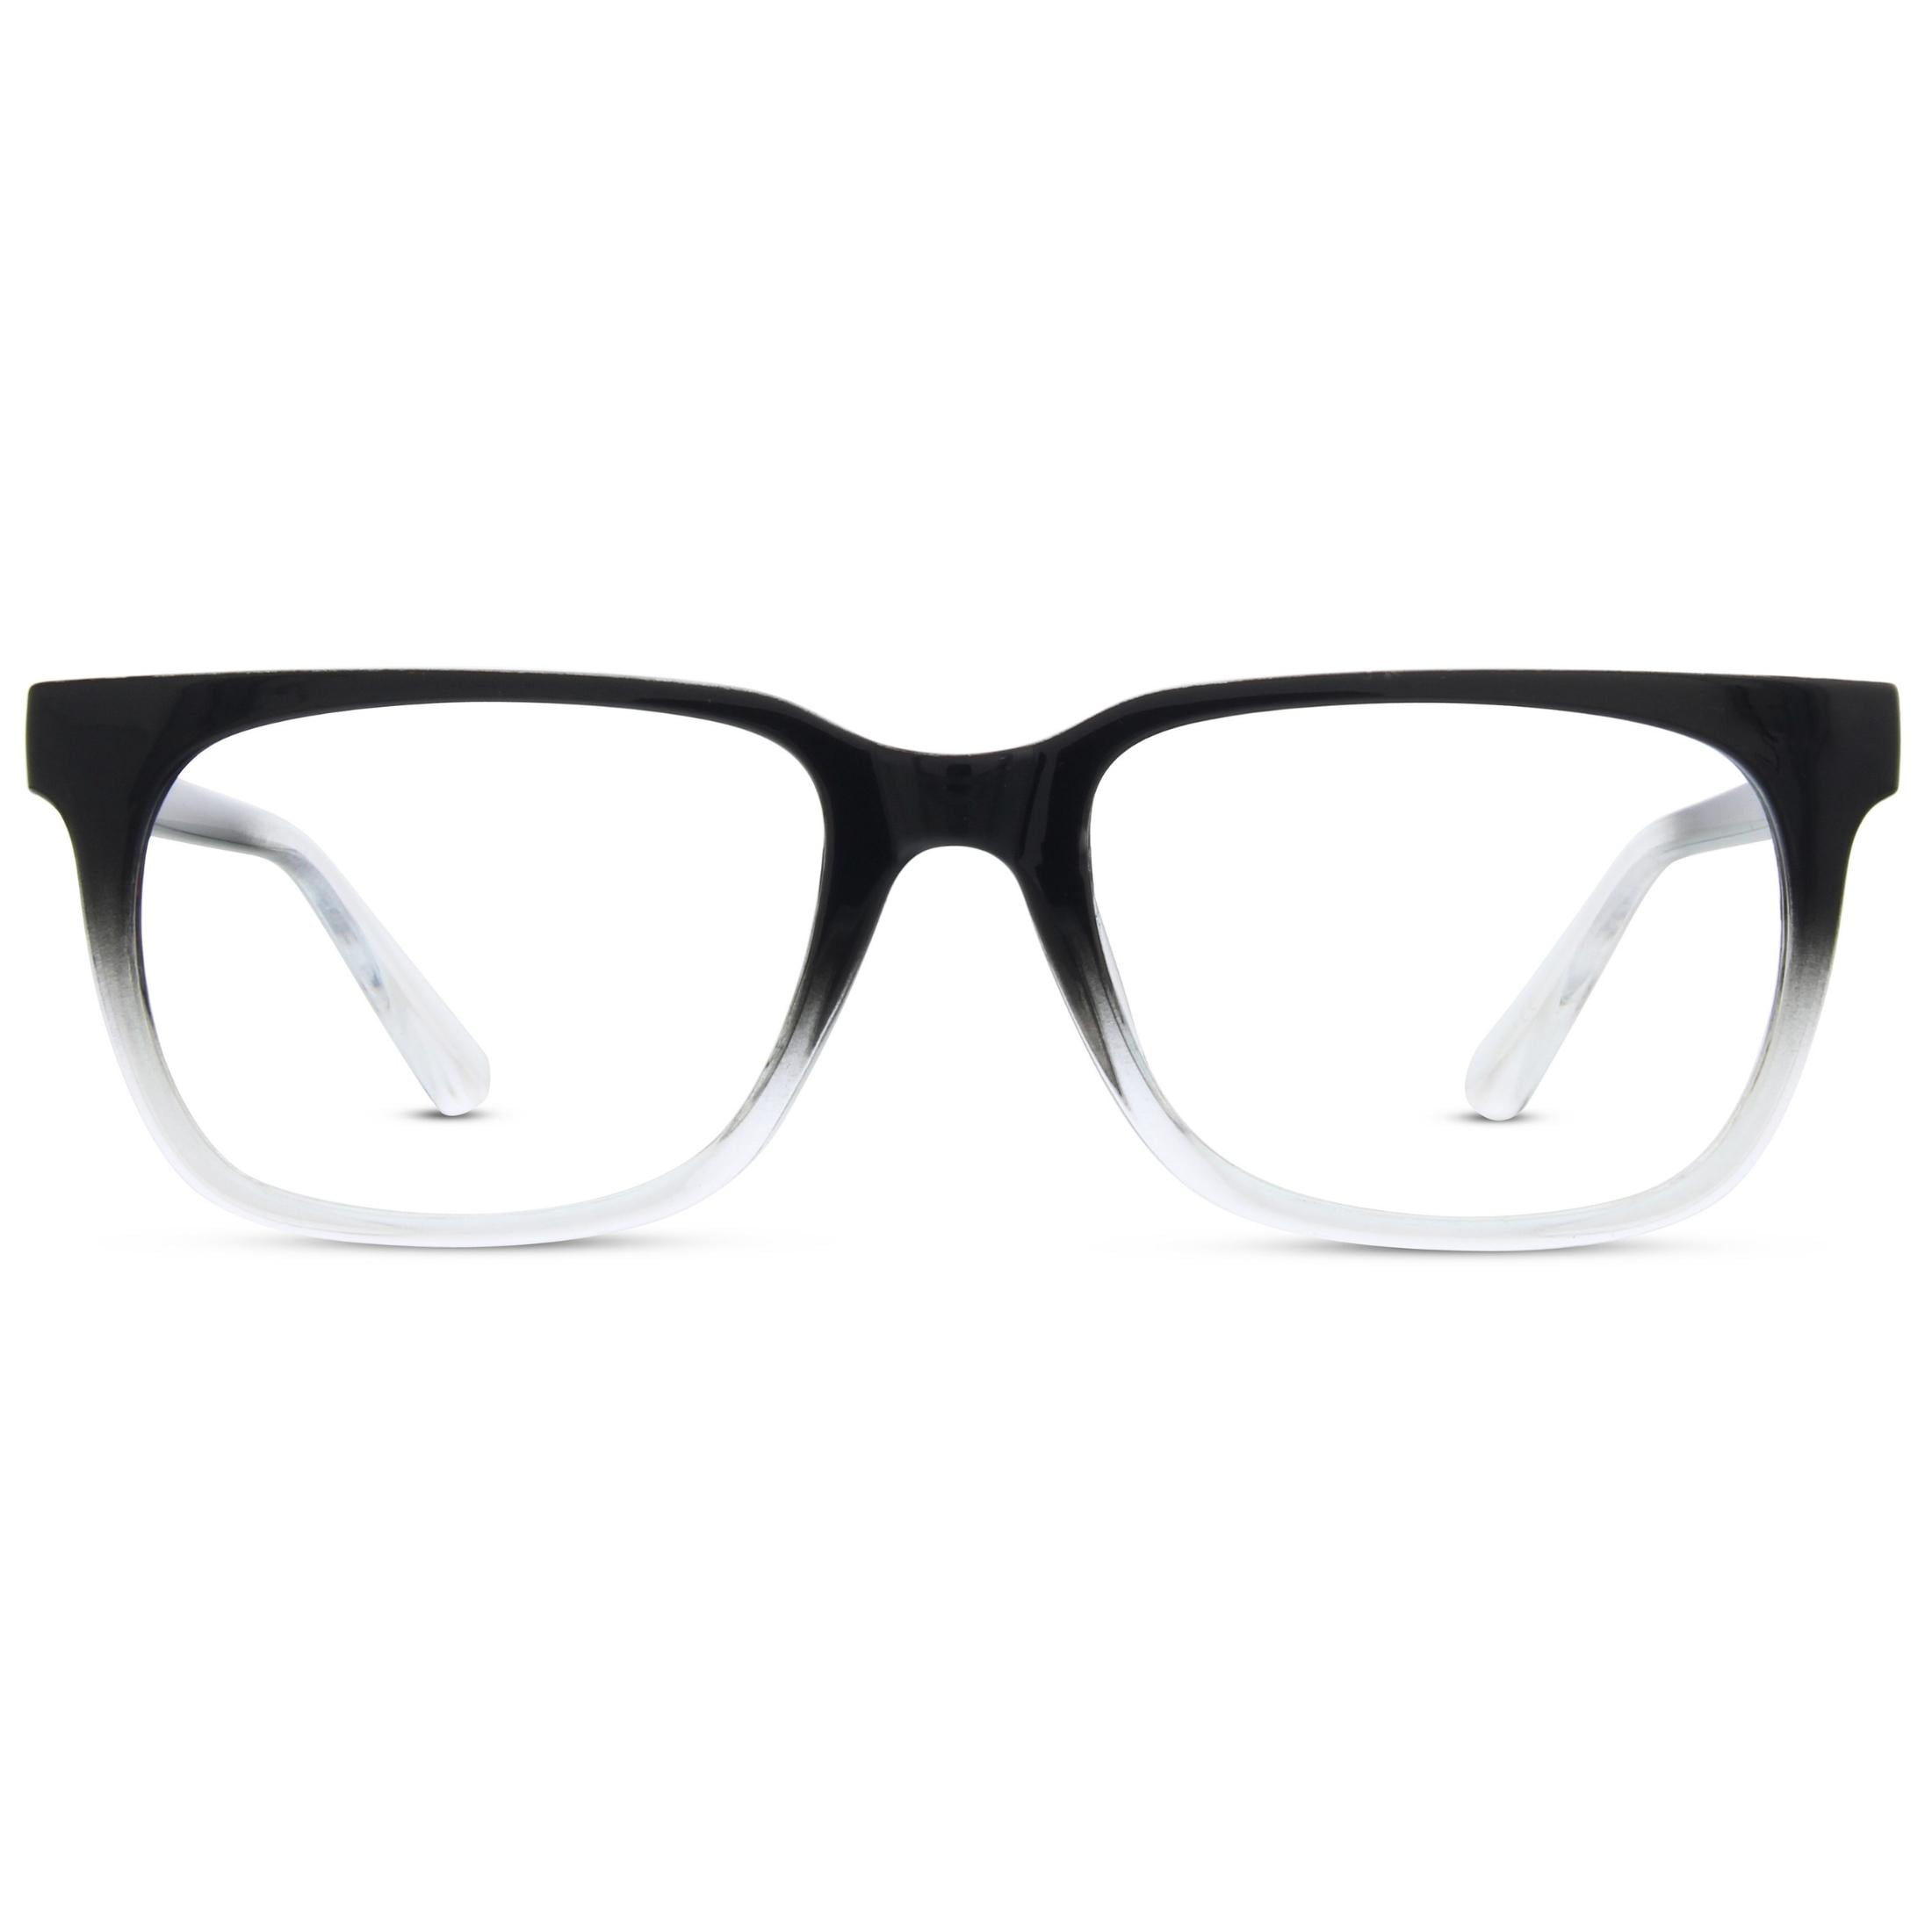 Jonas Paul Eyewear Blue Light Glasses, Black / Crystal Fade, Magnifying Acrylic Lens, Unisex, 2.00